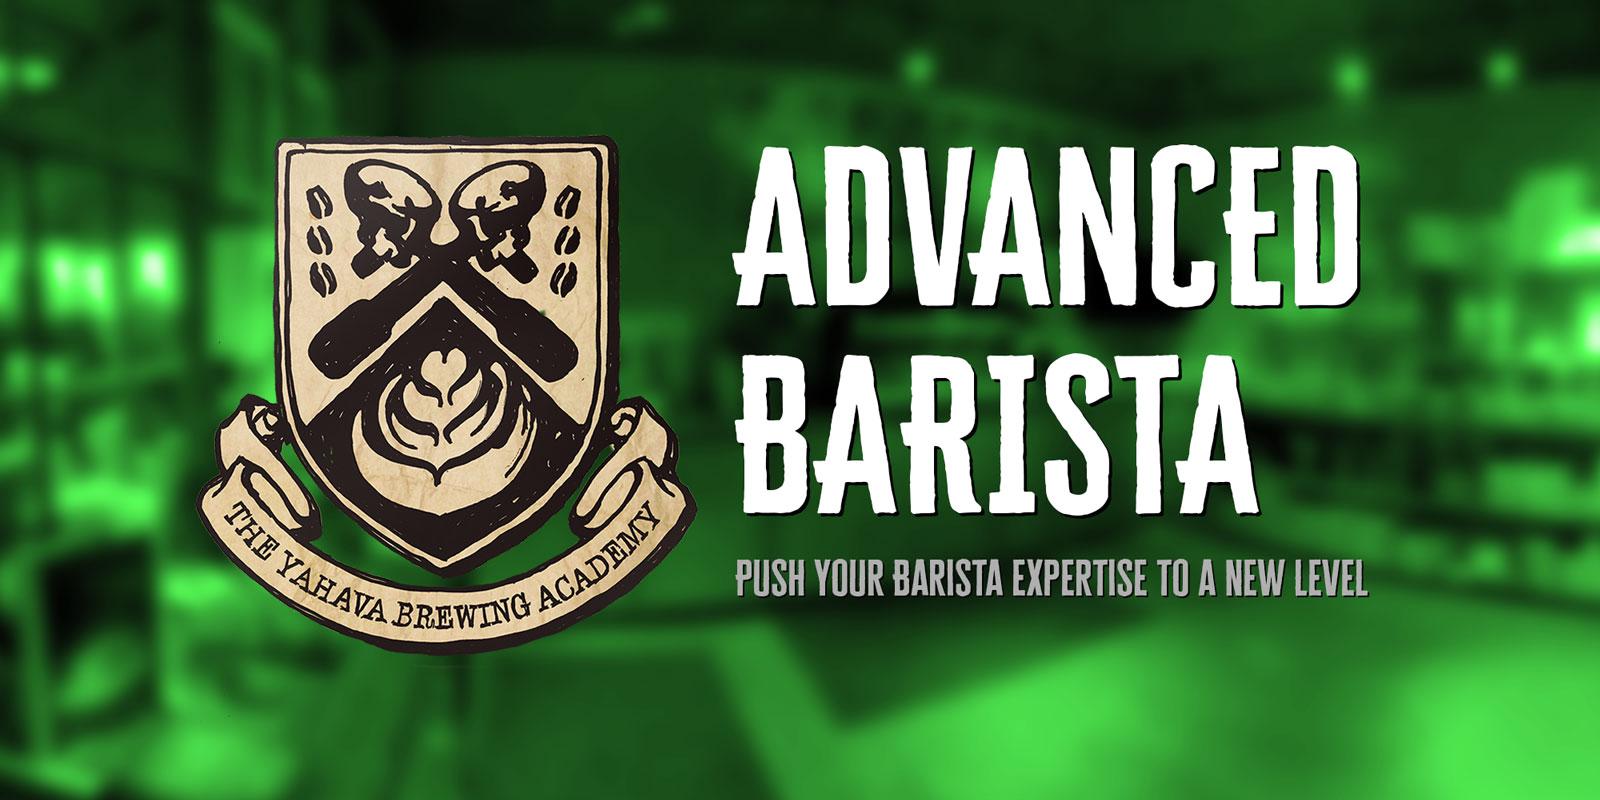 Advanced Barista course - Swan Valley